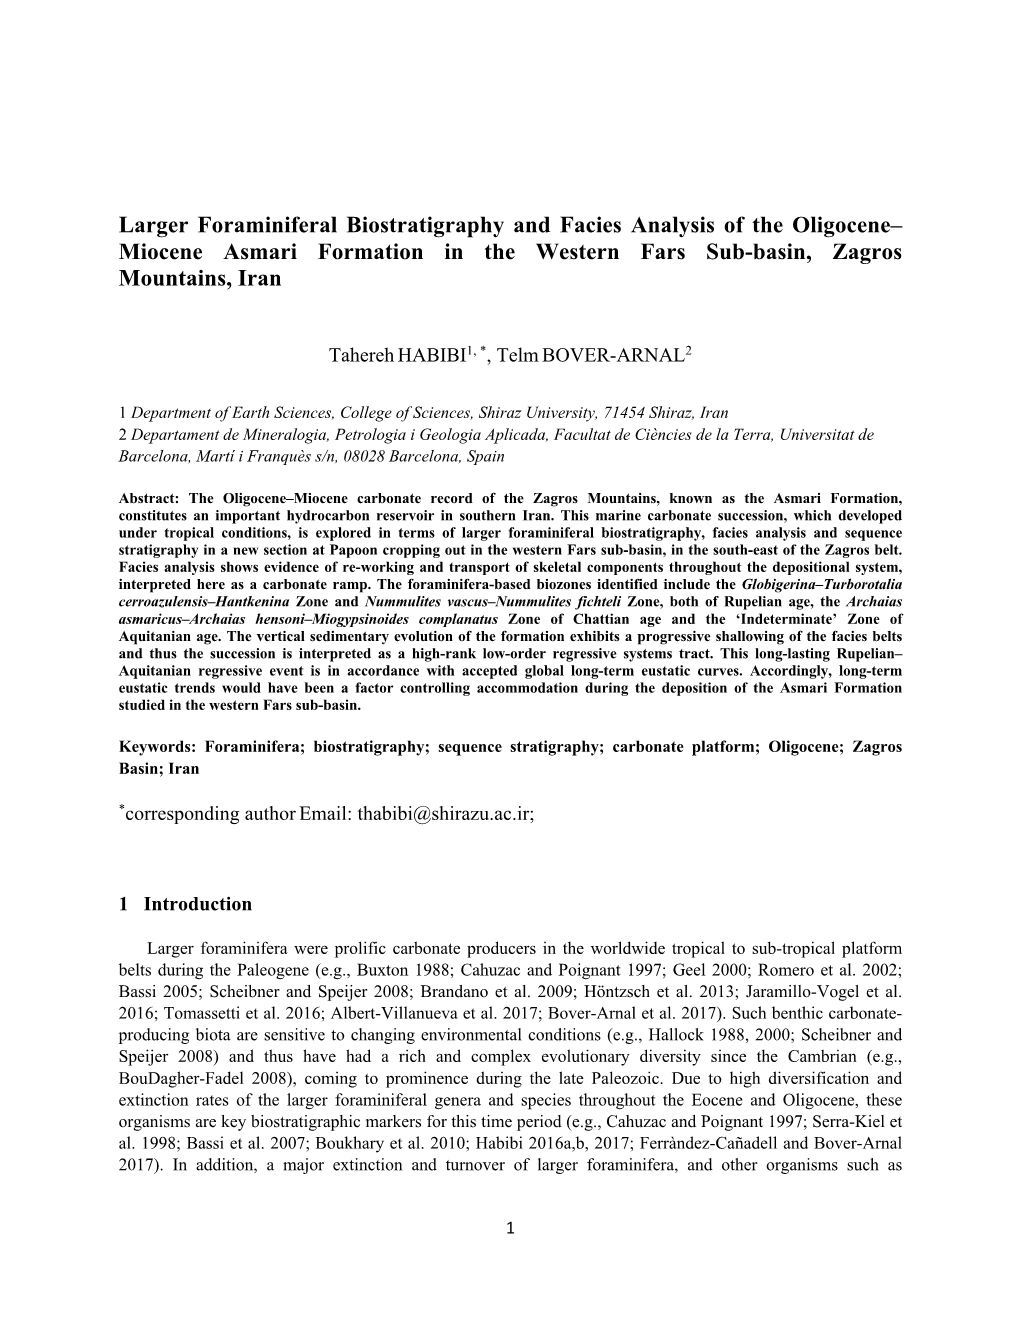 Larger Foraminiferal Biostratigraphy and Facies Analysis of the Oligocene– Miocene Asmari Formation in the Western Fars Sub-Basin, Zagros Mountains, Iran